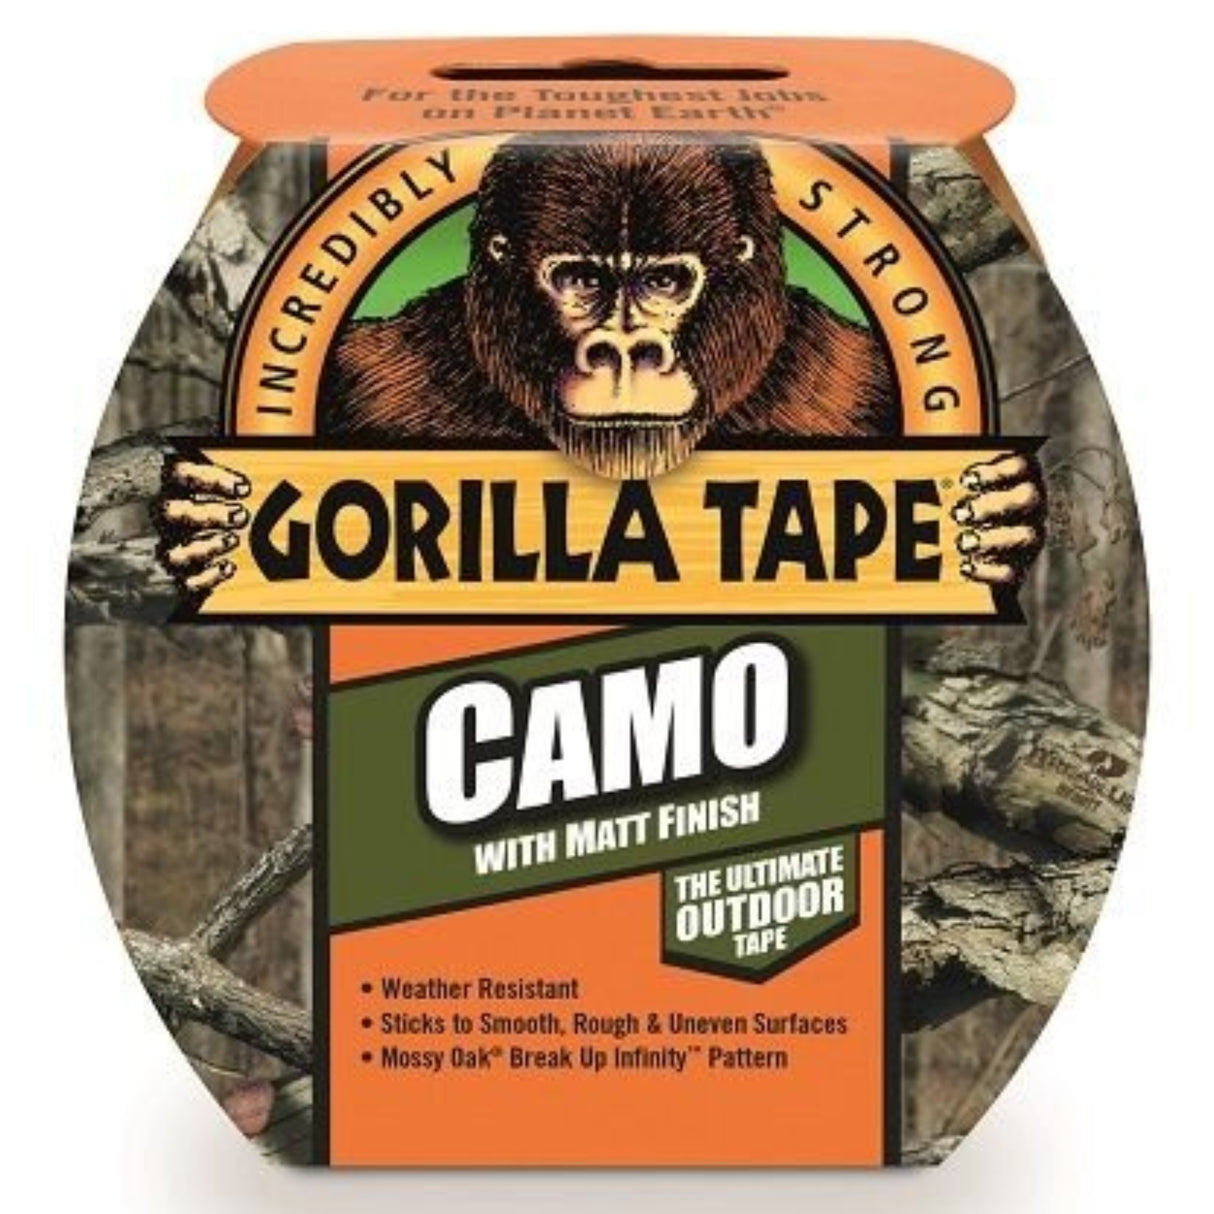 Gorilla Tape Camo 48mm x 8m - PROTEUS MARINE STORE